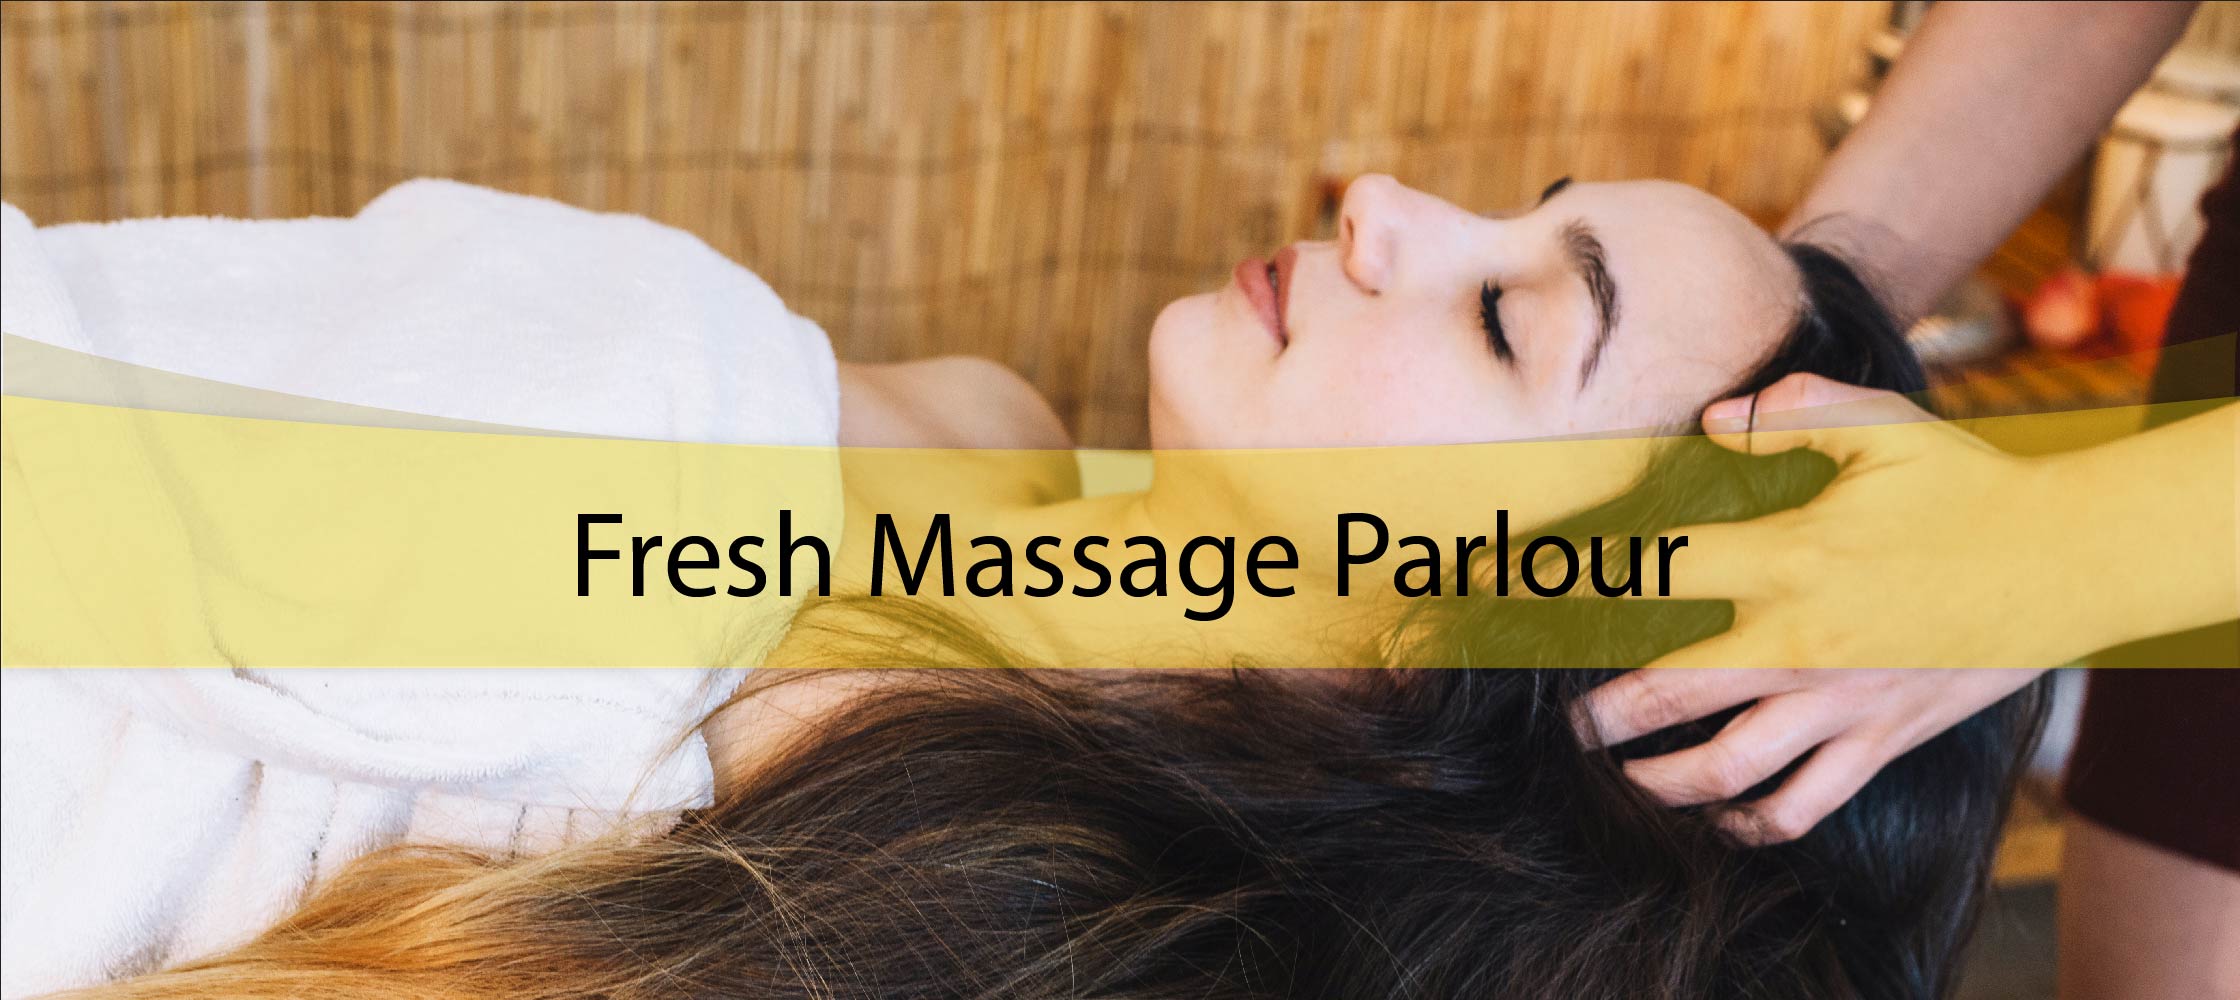 fresh massage parlour names